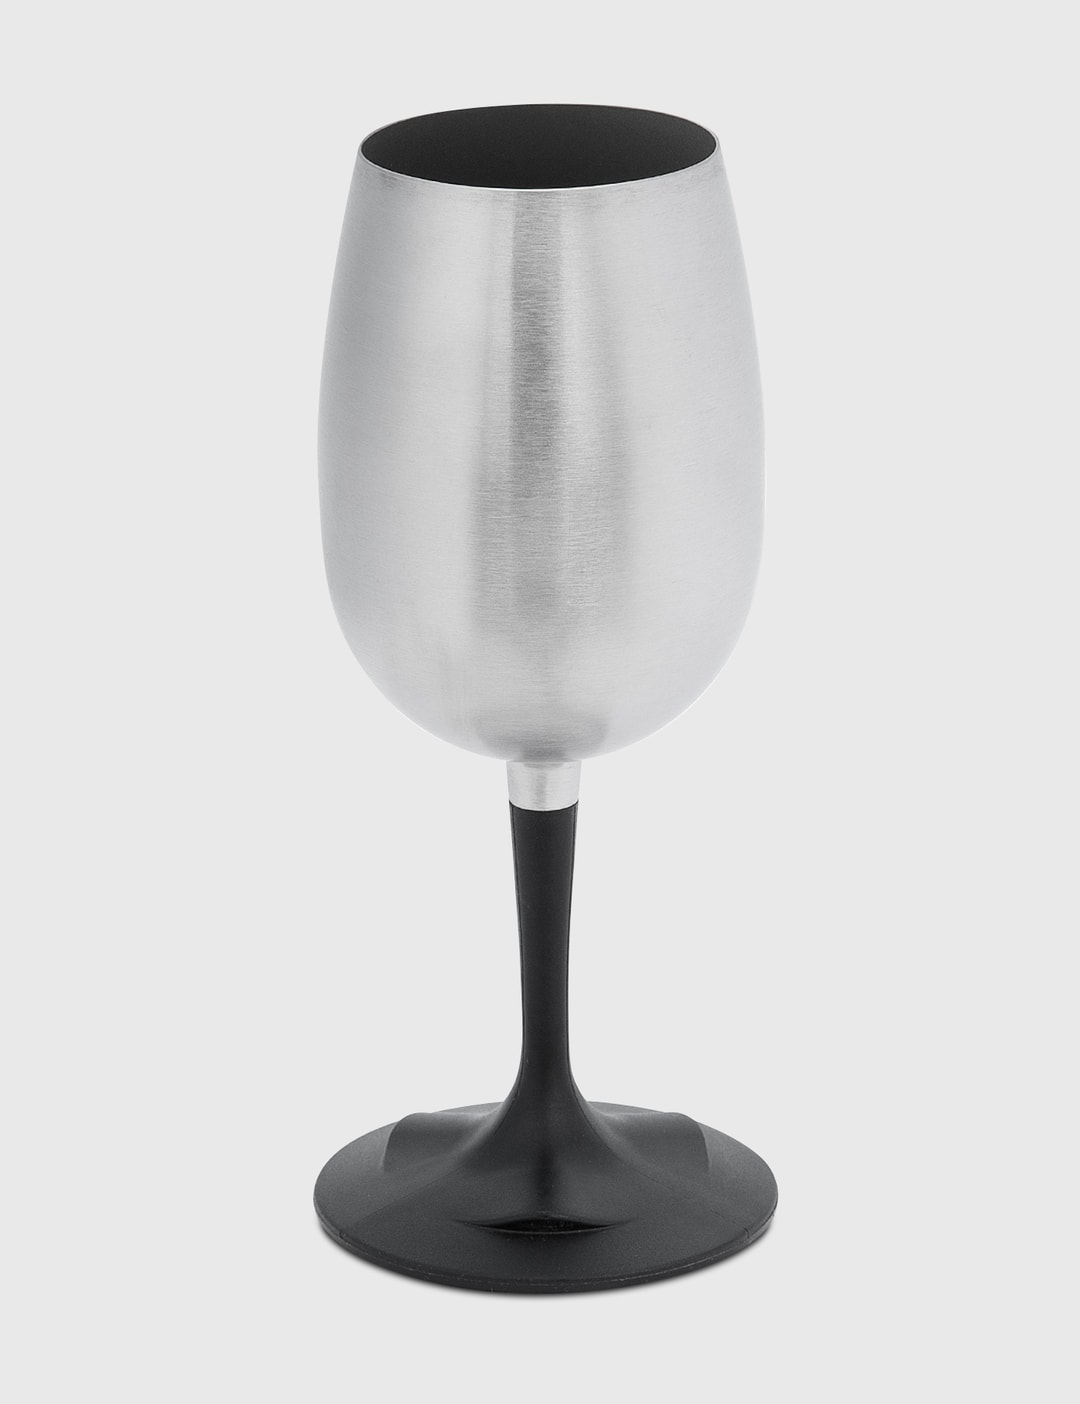 glacier stainless nesting wine glass